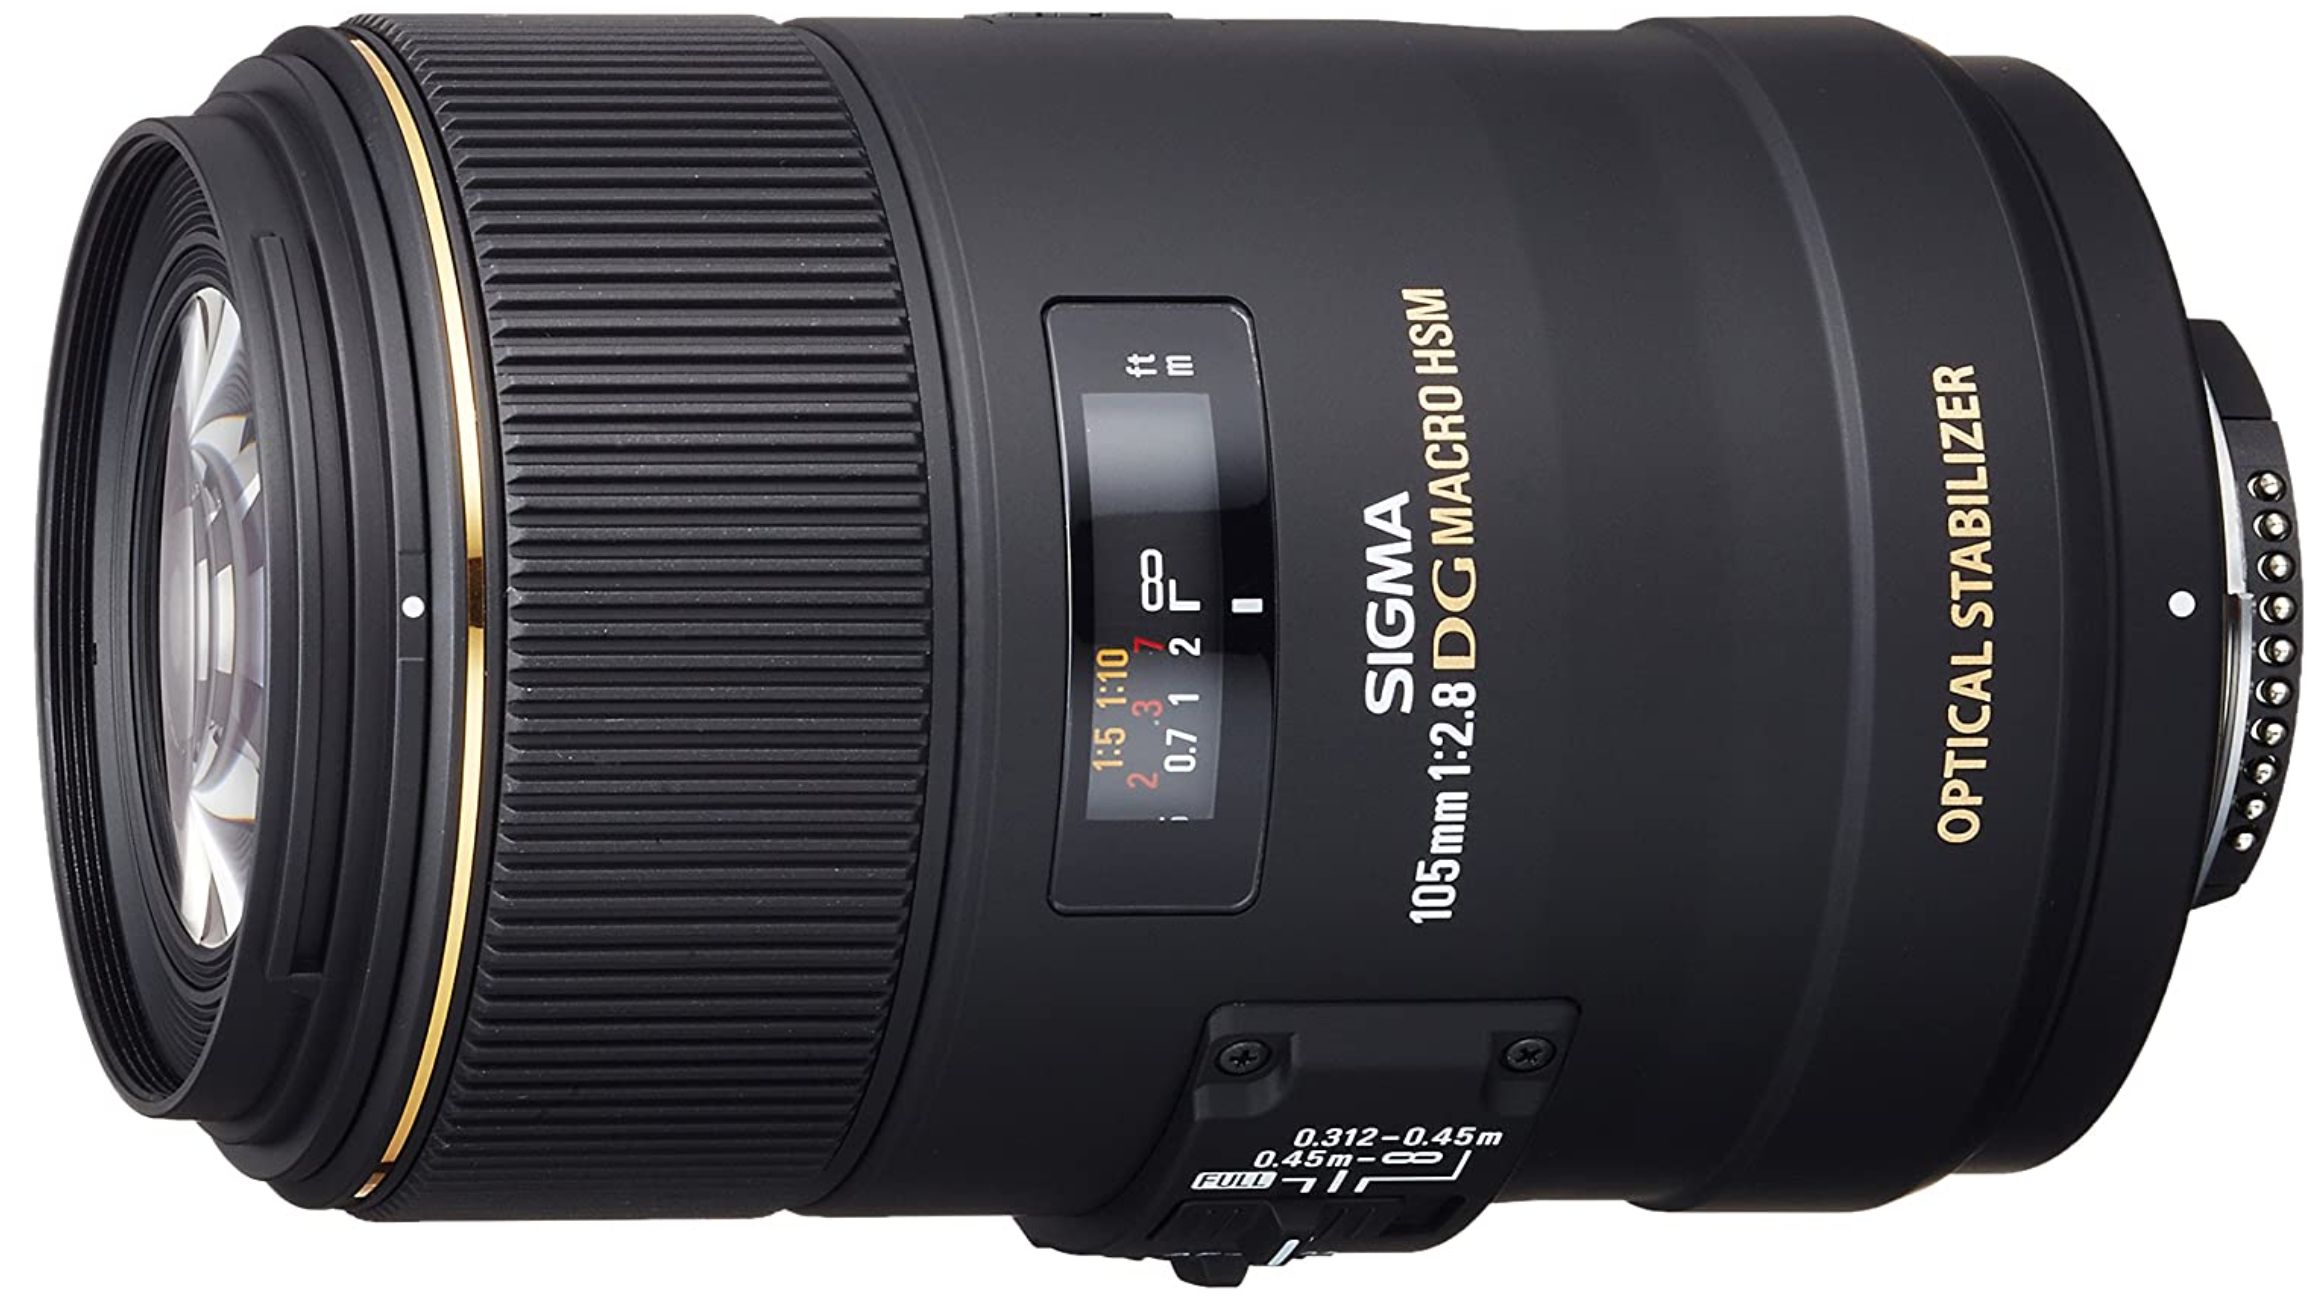 Best Sigma Lenses for Nikon